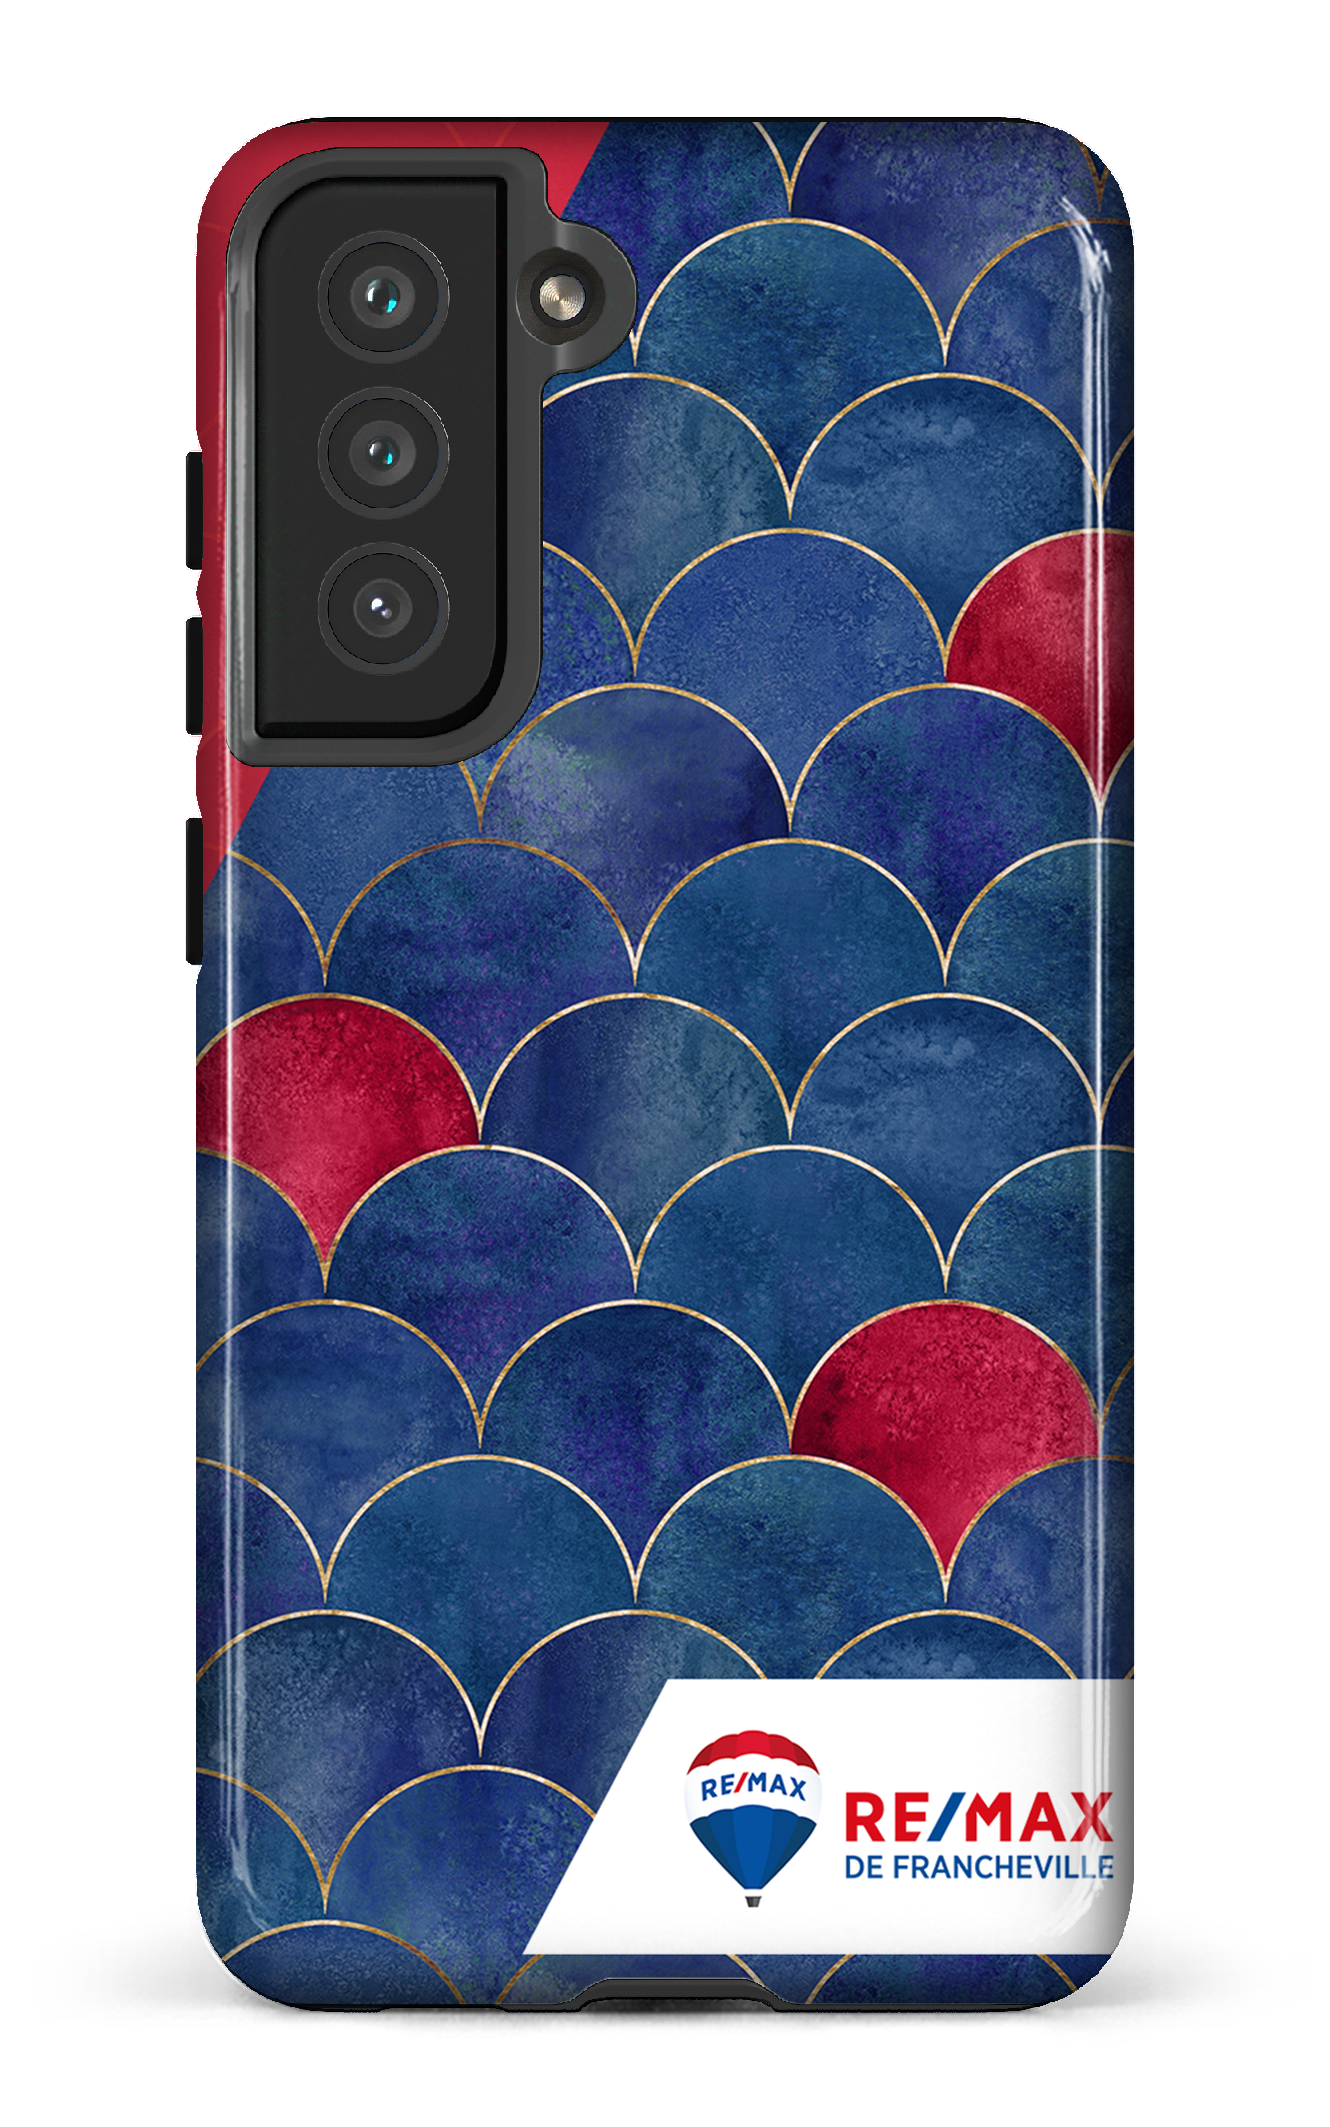 Écailles bicolores de Francheville - Galaxy S21 FE